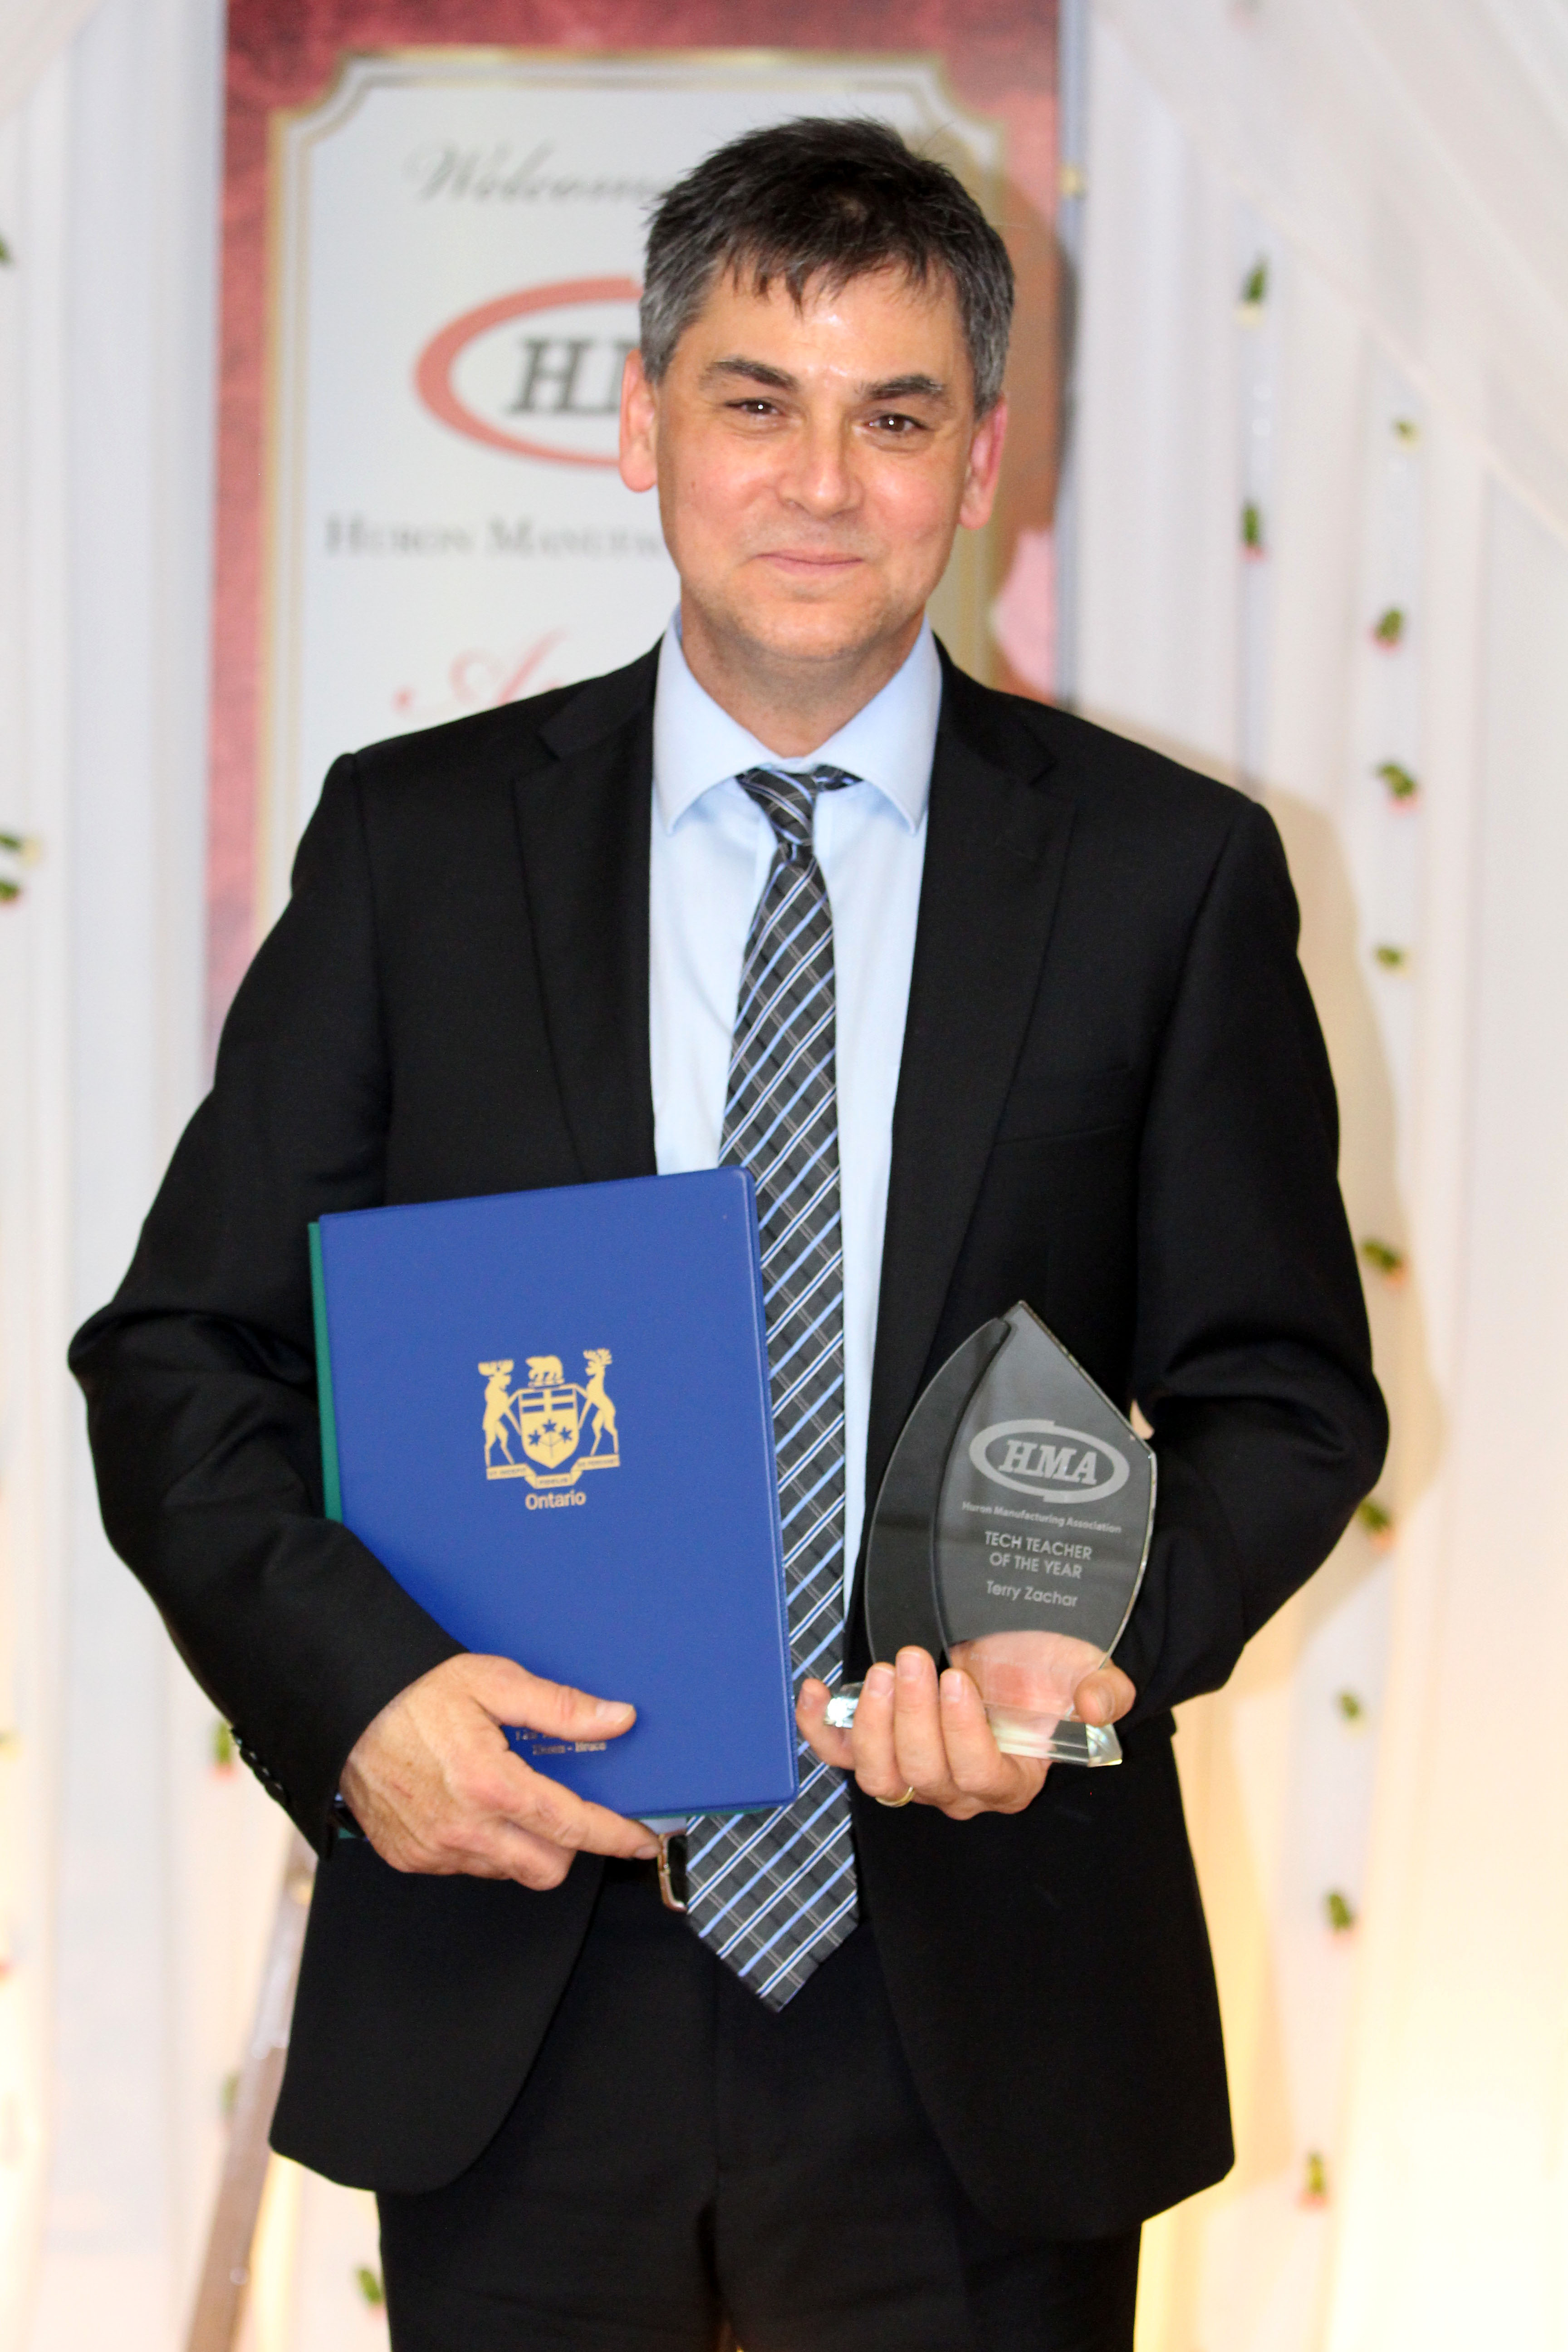 Teacher posing with his award from HMA awards